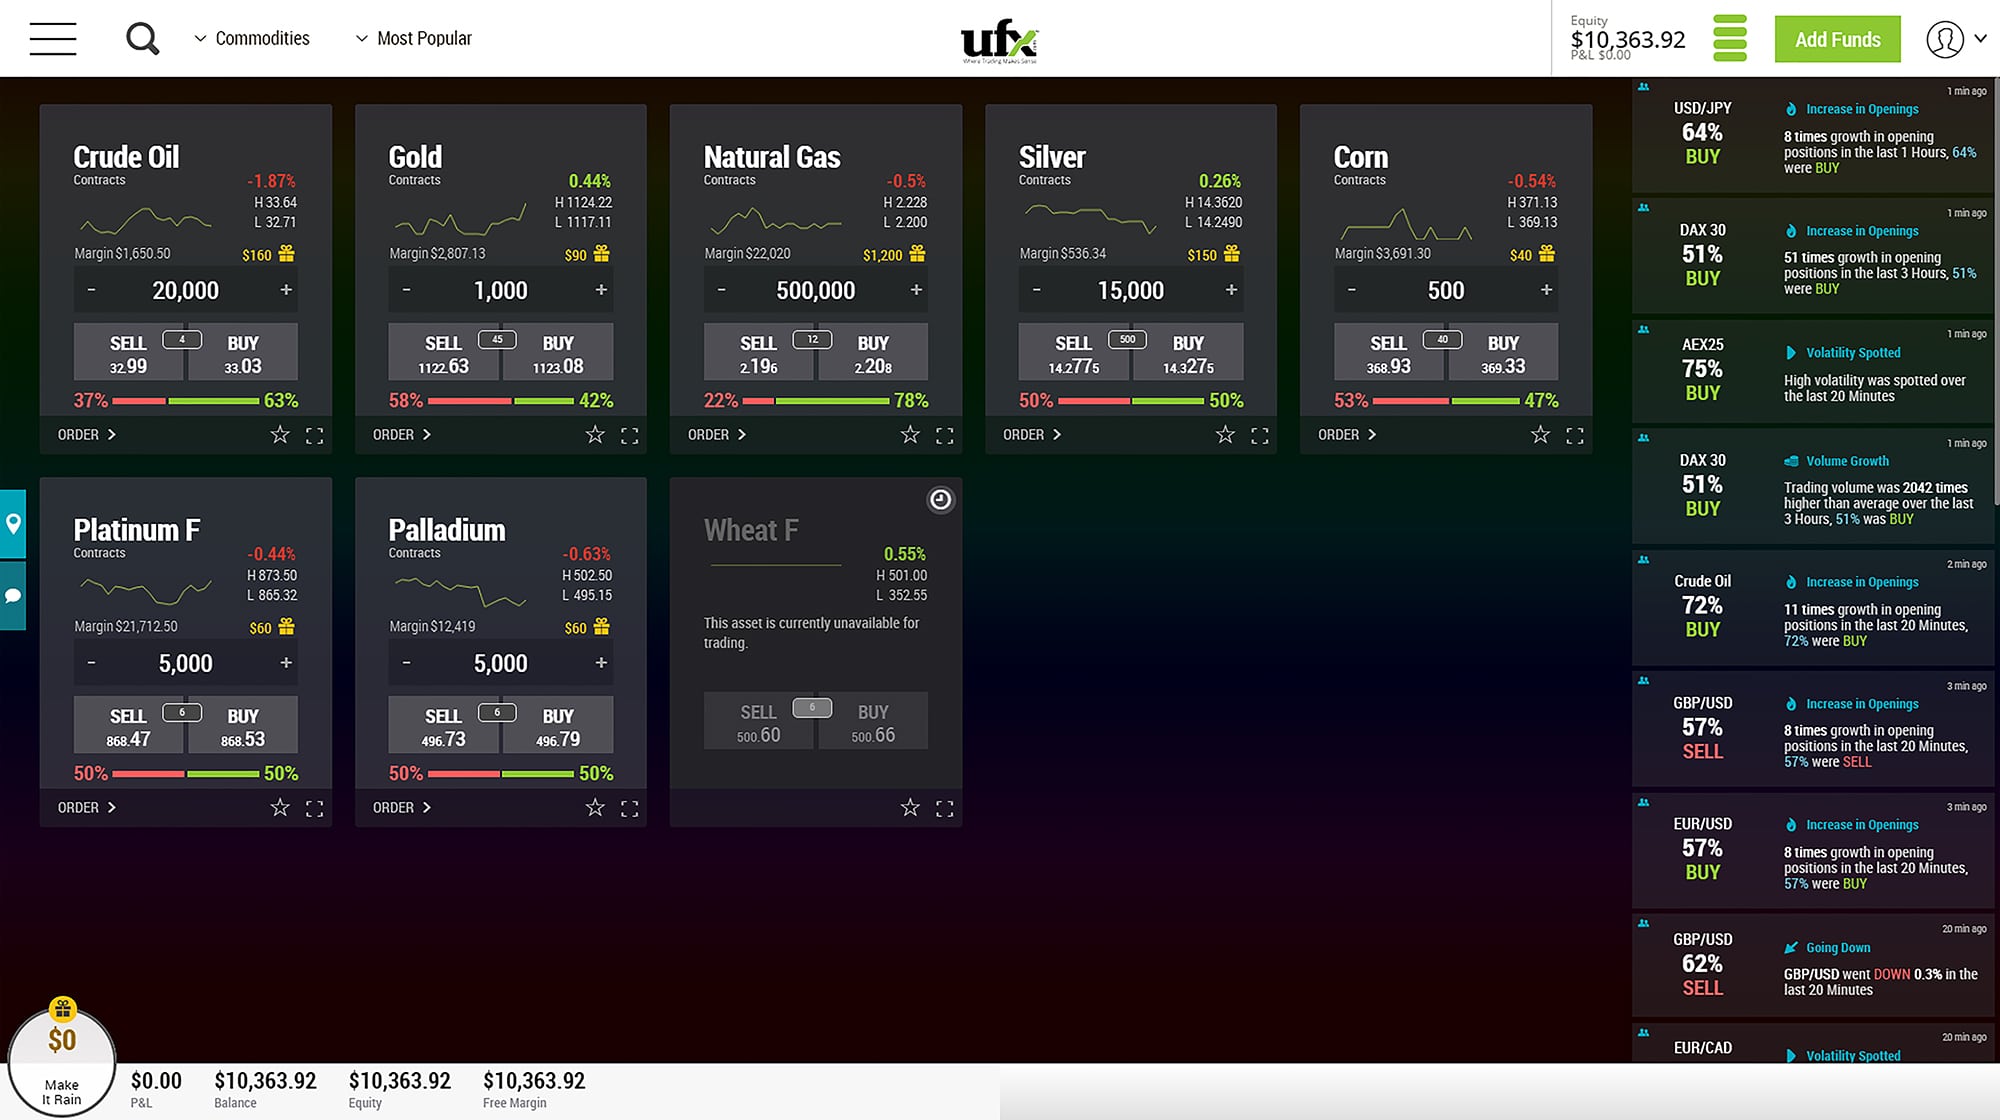 UFX.com Launches New Online Trading Platform ParagonEx 4.0 ...